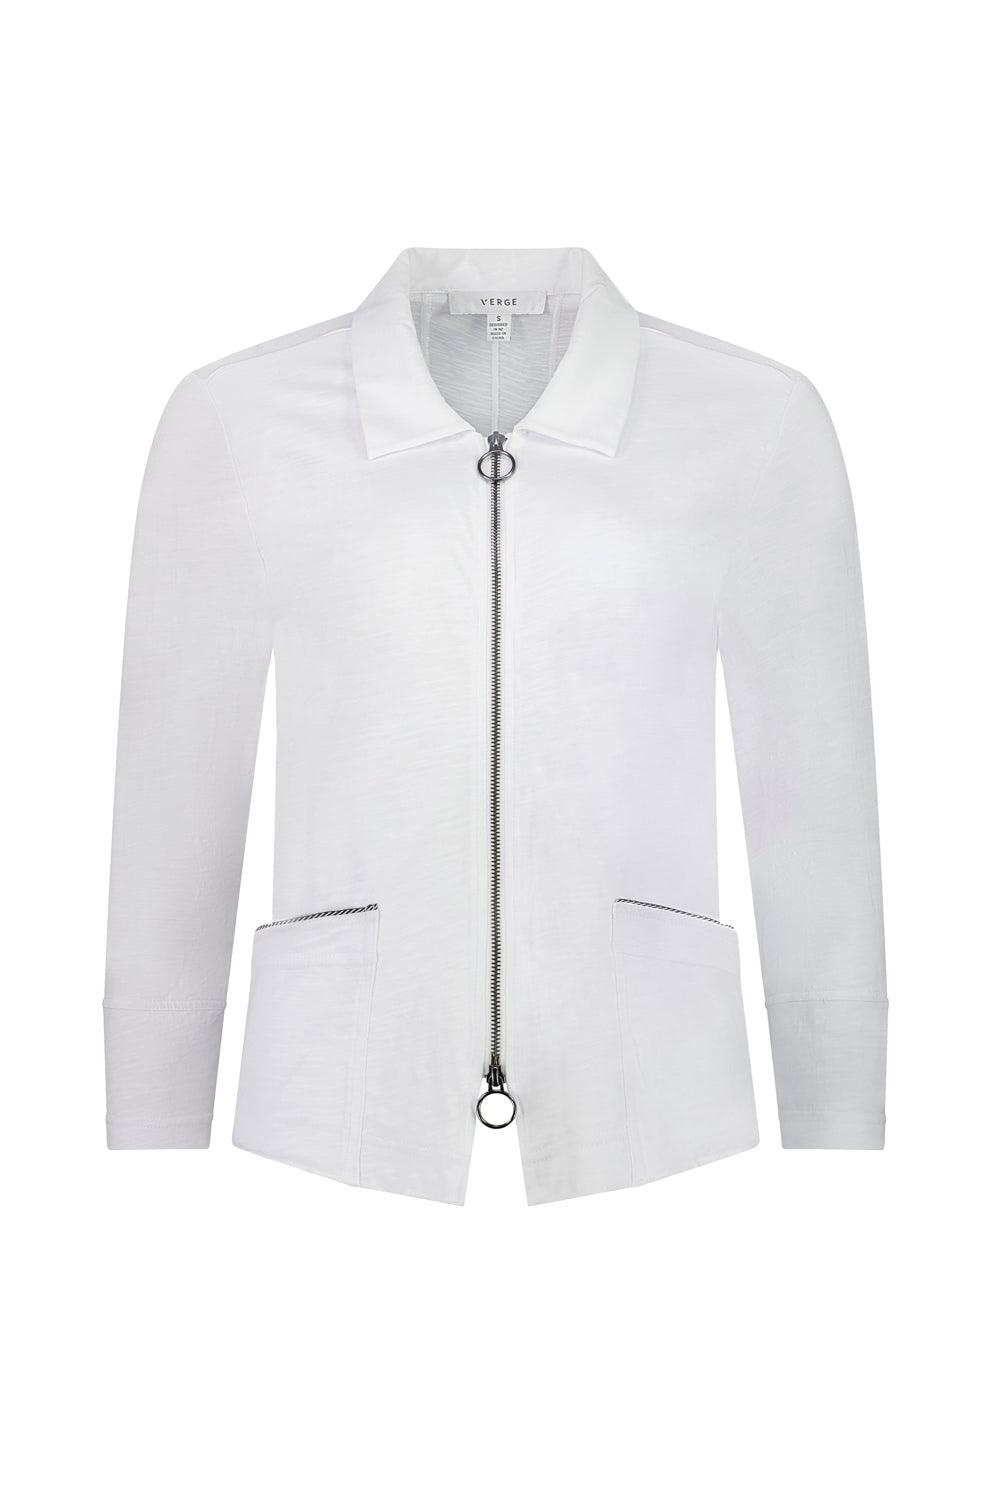 Fix Jacket - White - Shirt VERGE